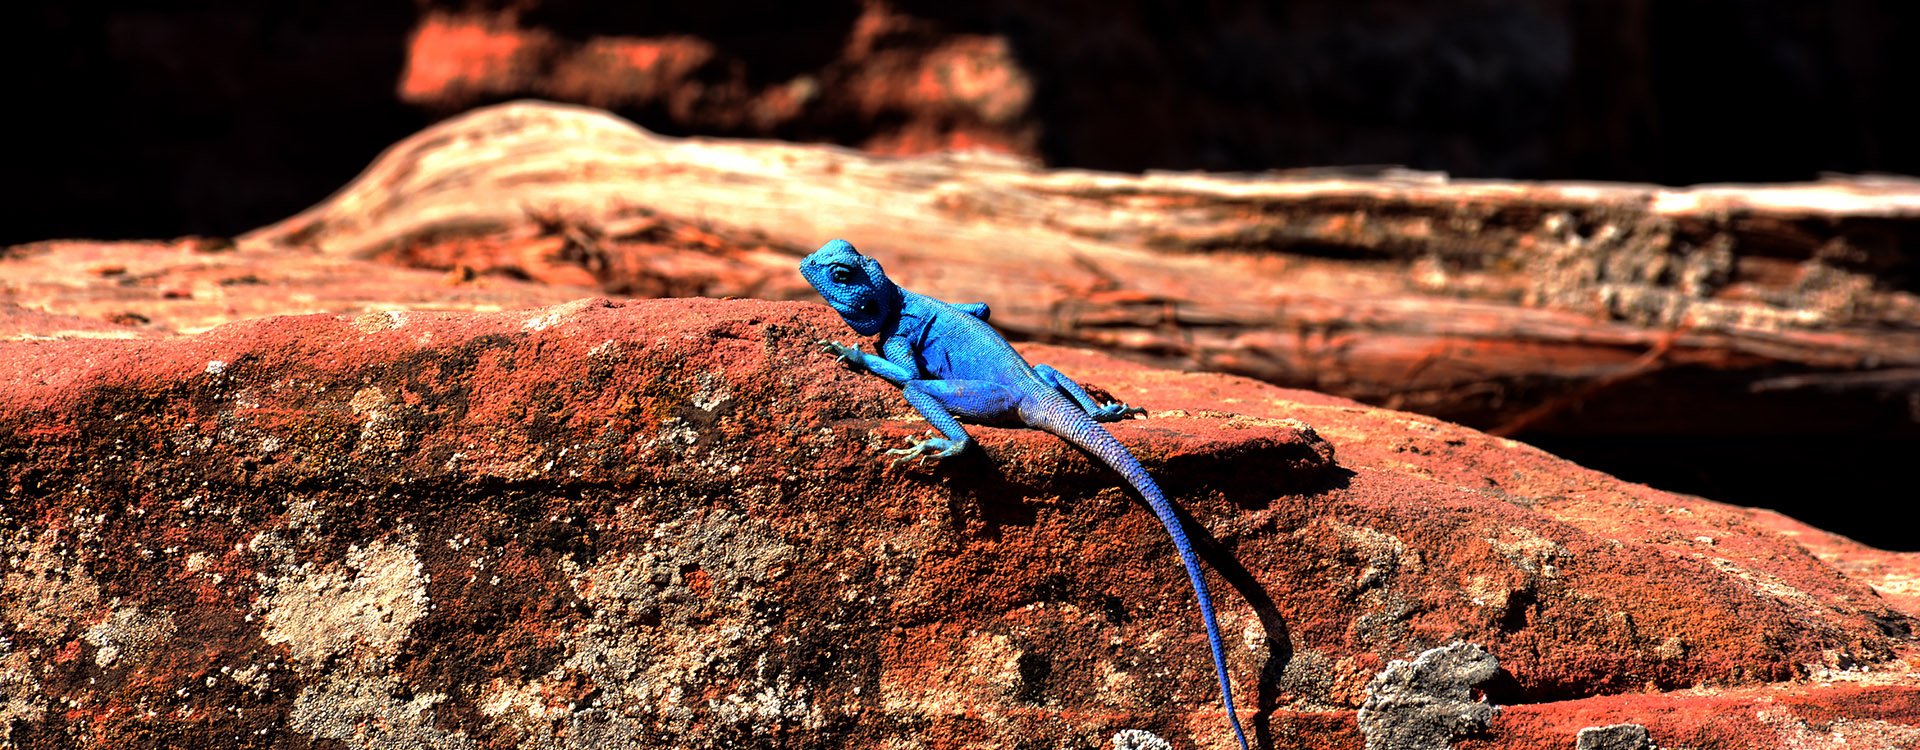 The Blue Sinai Agama in Dana nature reserve in Jordan